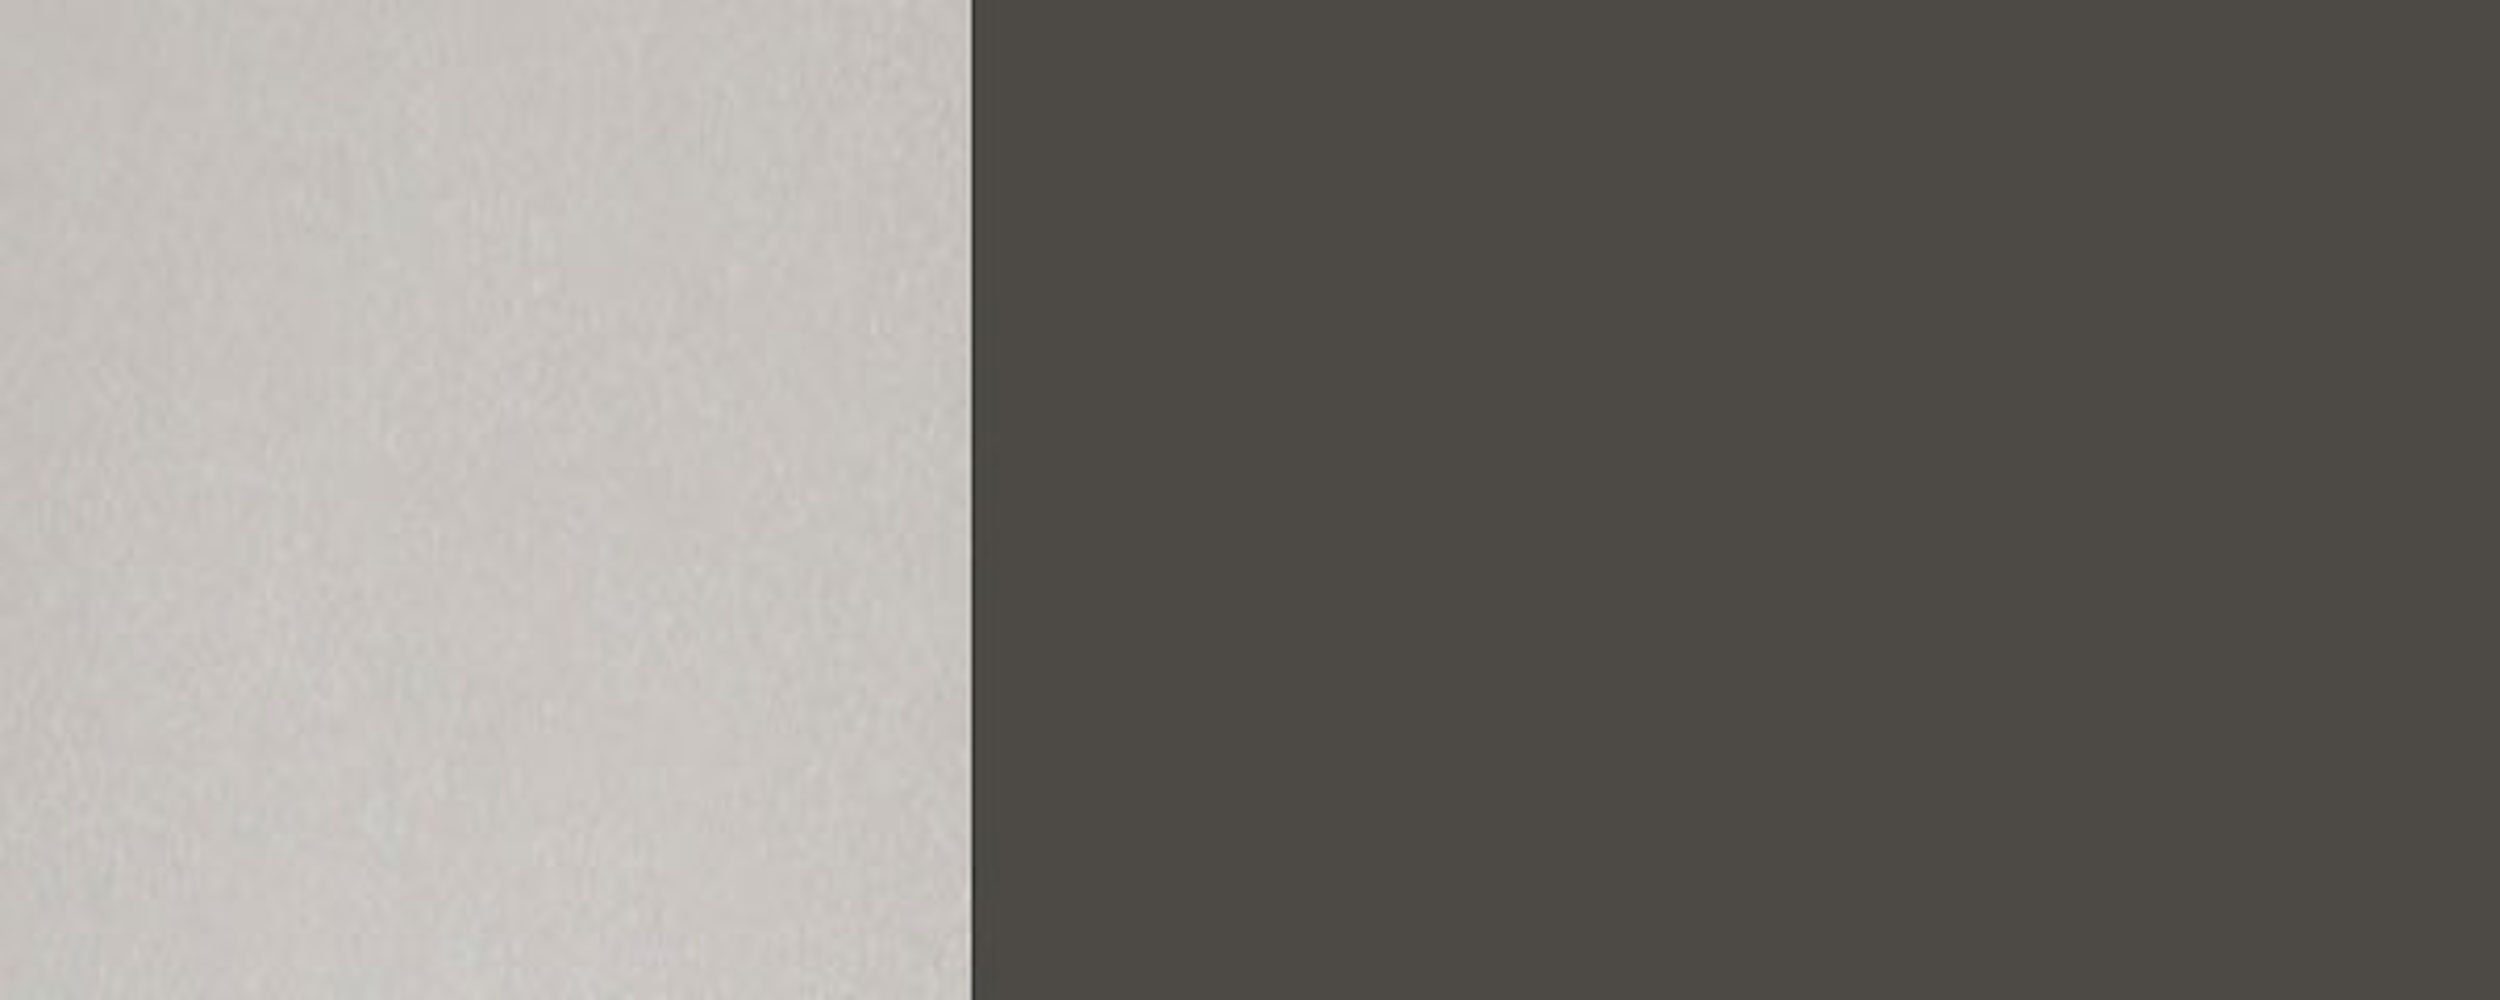 Klapphängeschrank matt Feldmann-Wohnen Glasfront 1-türig wählbar 45cm RAL und umbragrau Korpusfarbe Tivoli 7022 (Tivoli) (glasklar) Front- mit